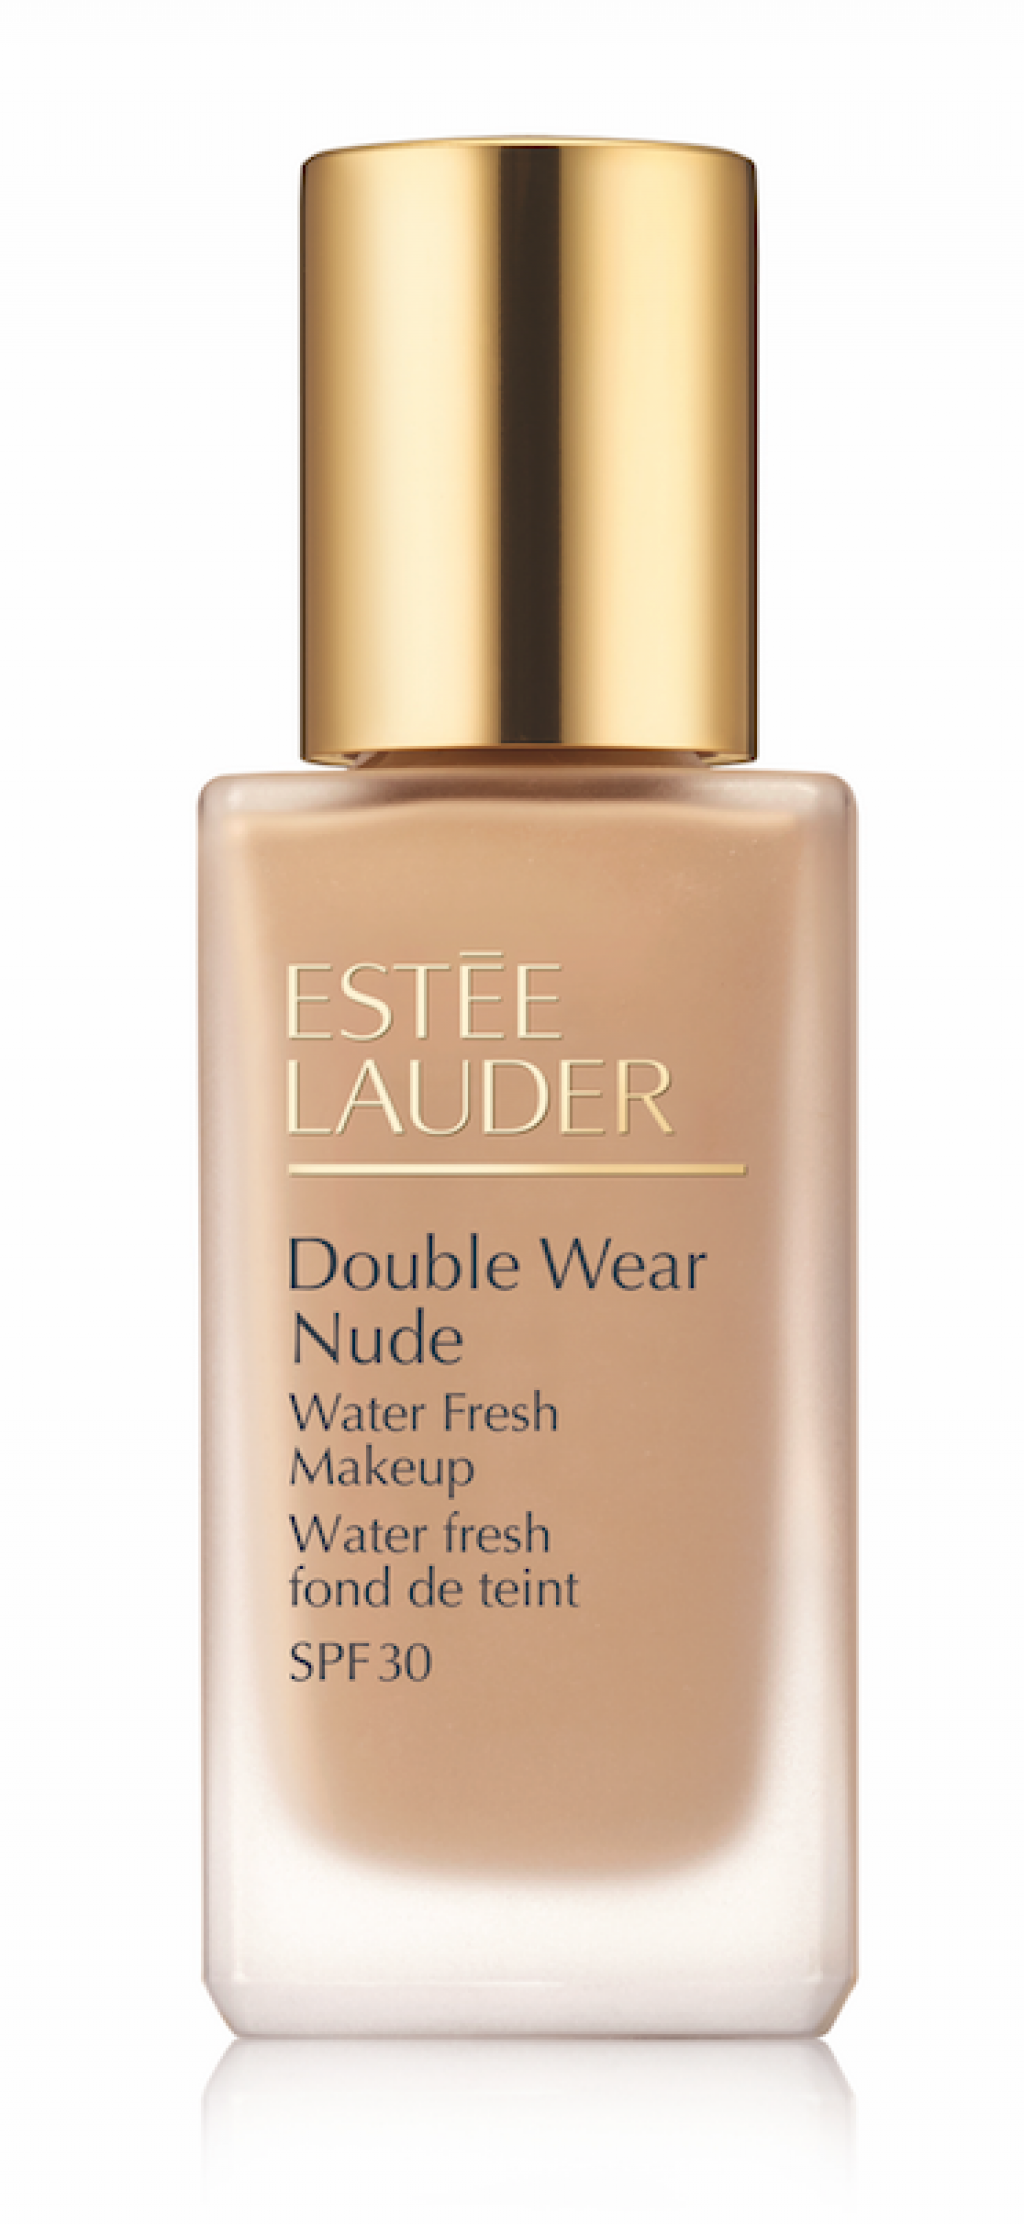 Estee Lauder Double Wear Nude Water Fresh Makeup SPF 30 n 